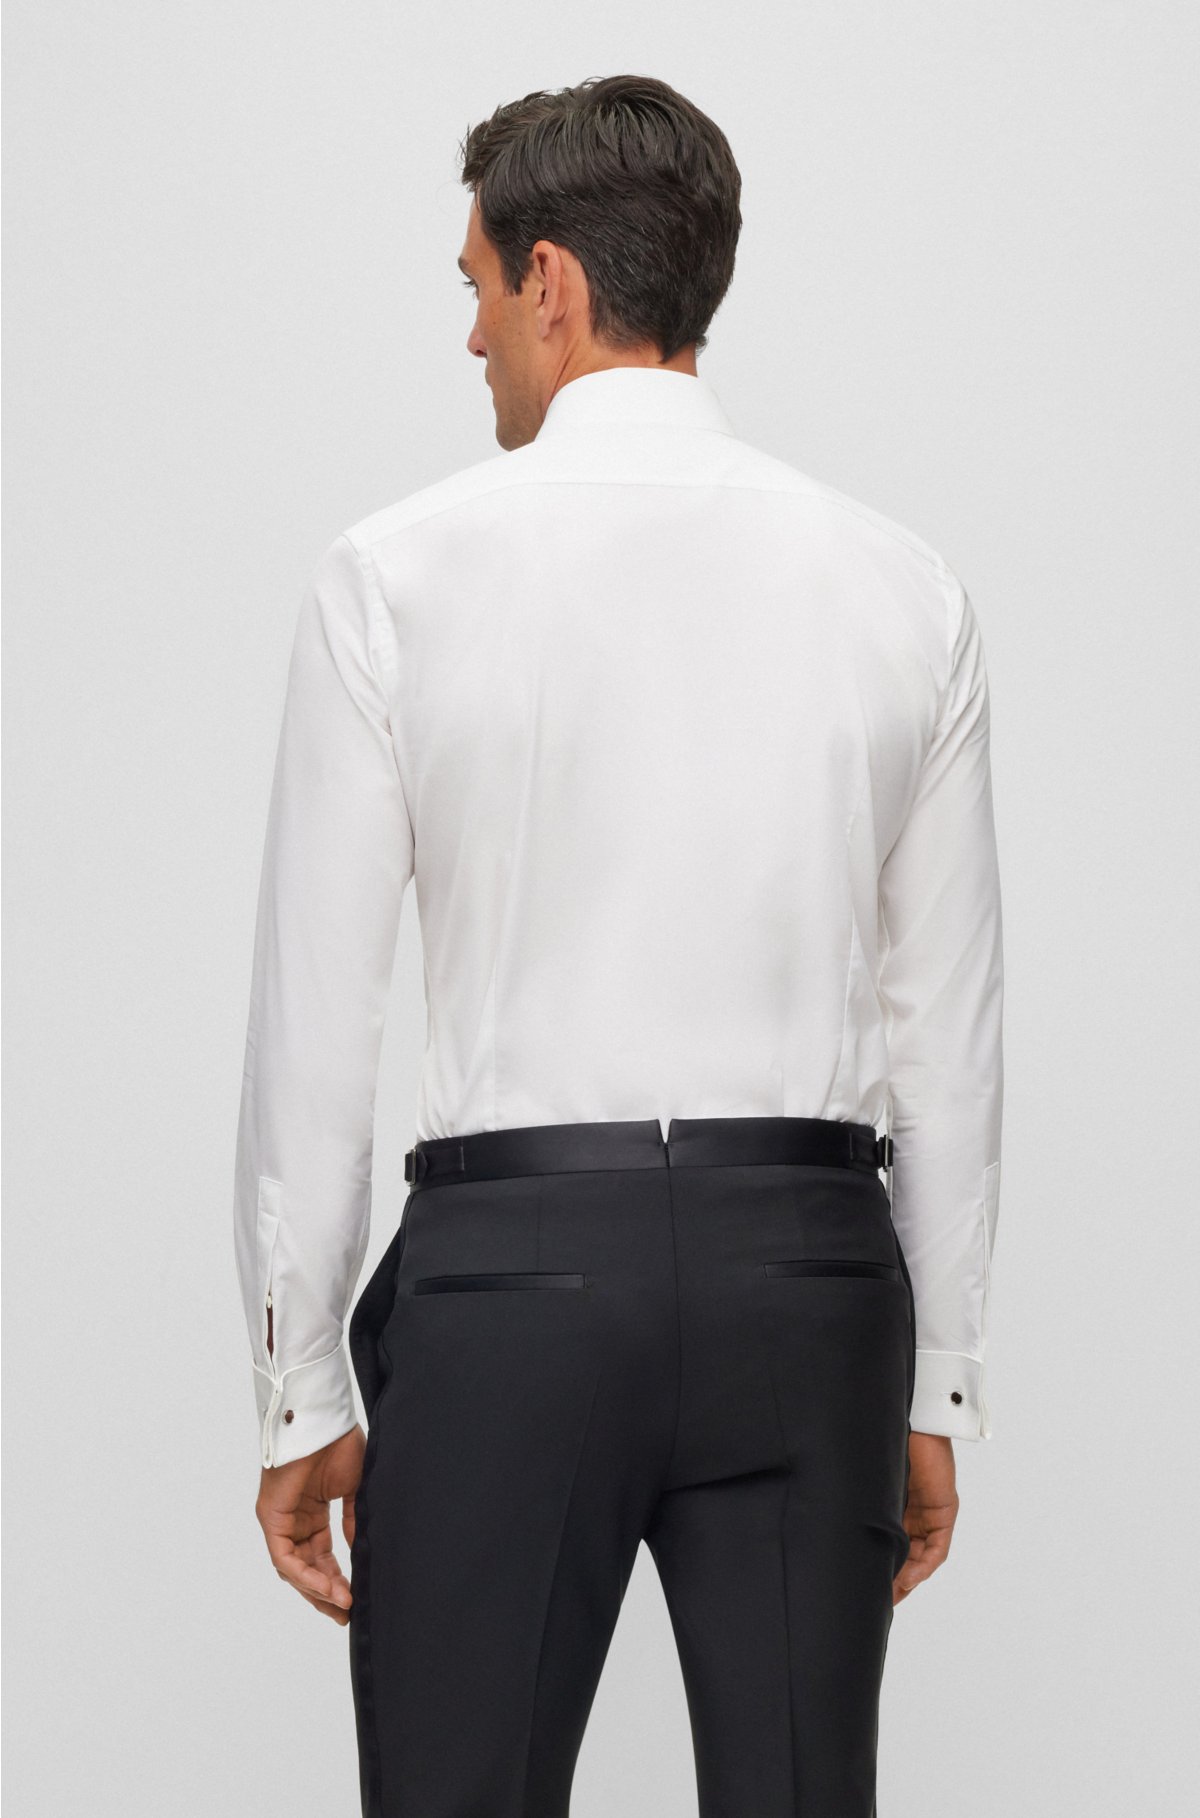 White tuxedo Shirt - Made in Italy